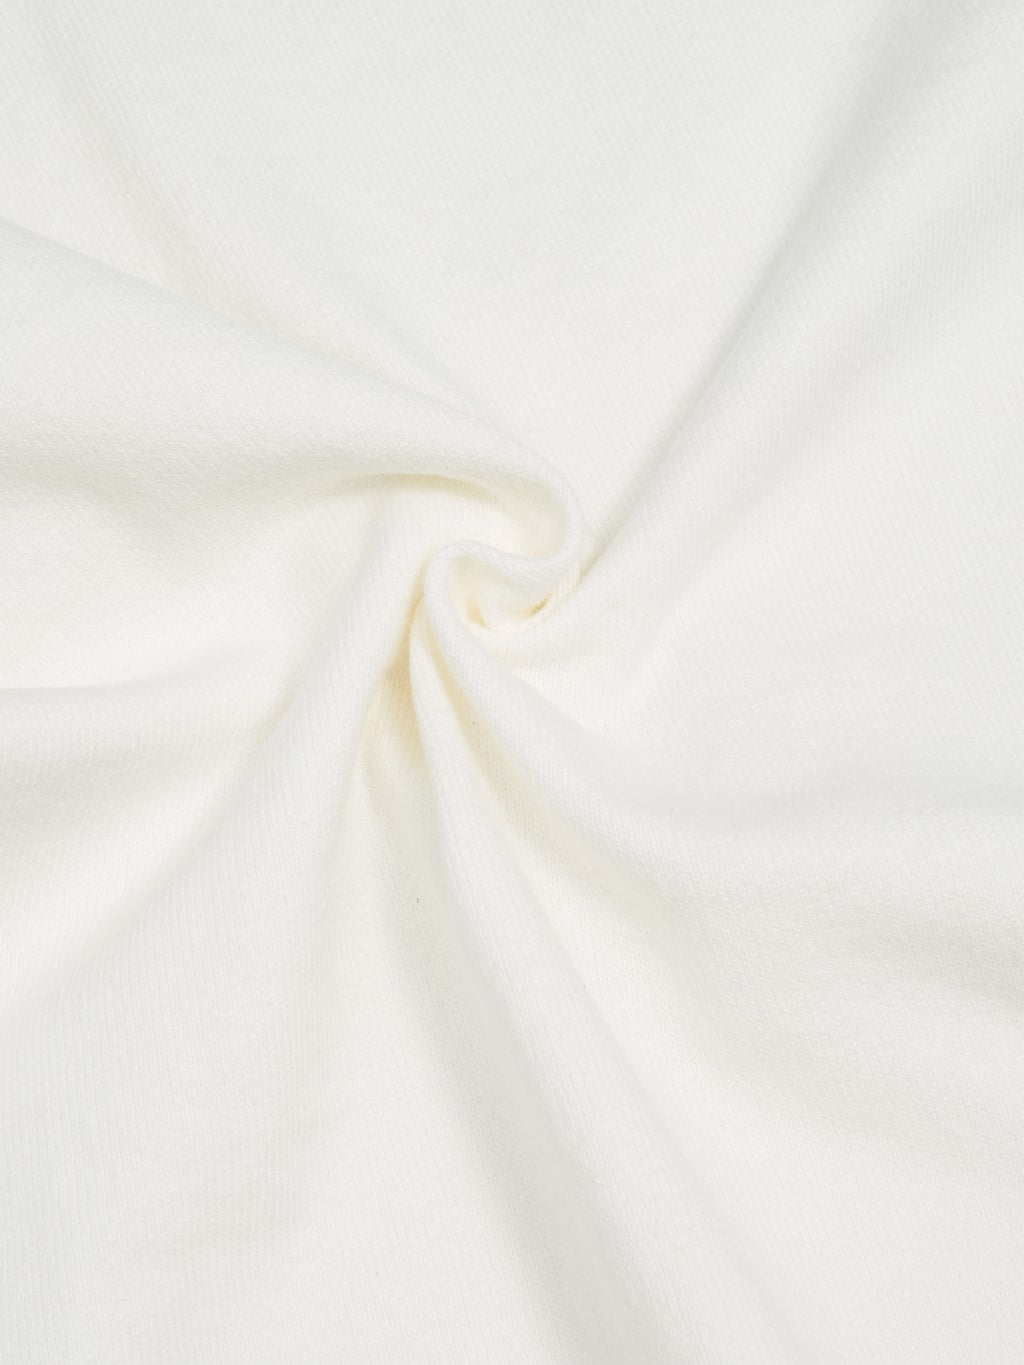 wonder looper crewneck Tshirt Double Heavyweight white  texture fabric